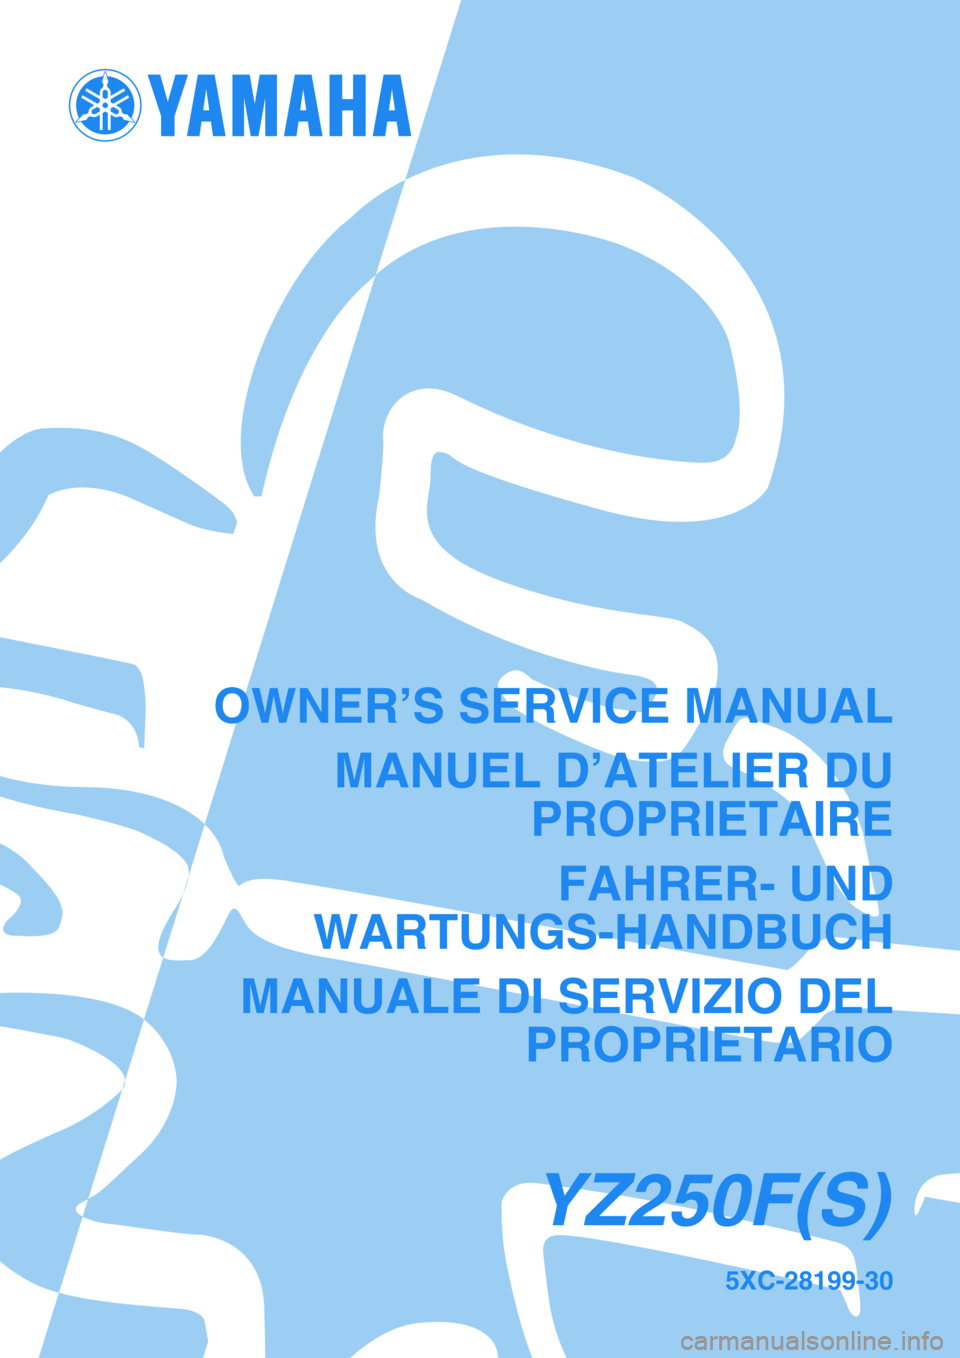 YAMAHA YZ250F 2004  Manuale duso (in Italian) 5XC-28199-30
YZ250F(S)
OWNER’S SERVICE MANUAL
MANUEL D’ATELIER DU
PROPRIETAIRE
FAHRER- UND
WARTUNGS-HANDBUCH
MANUALE DI SERVIZIO DEL
PROPRIETARIO 